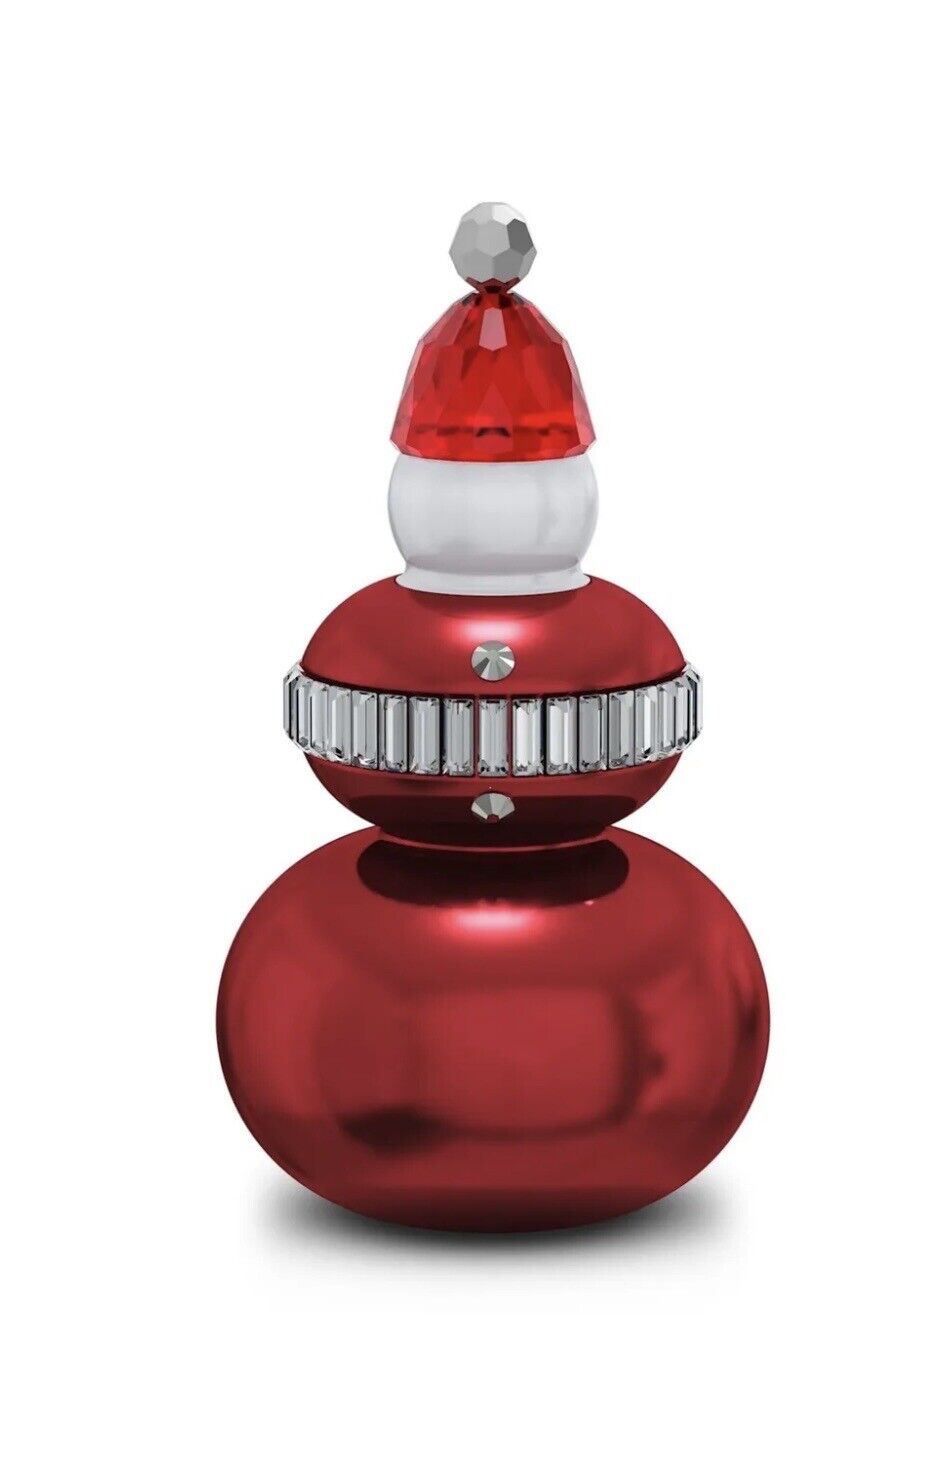 Swarovski Crystal Holiday Cheers Santa Claus Figurine Decoration, Red, 5596362